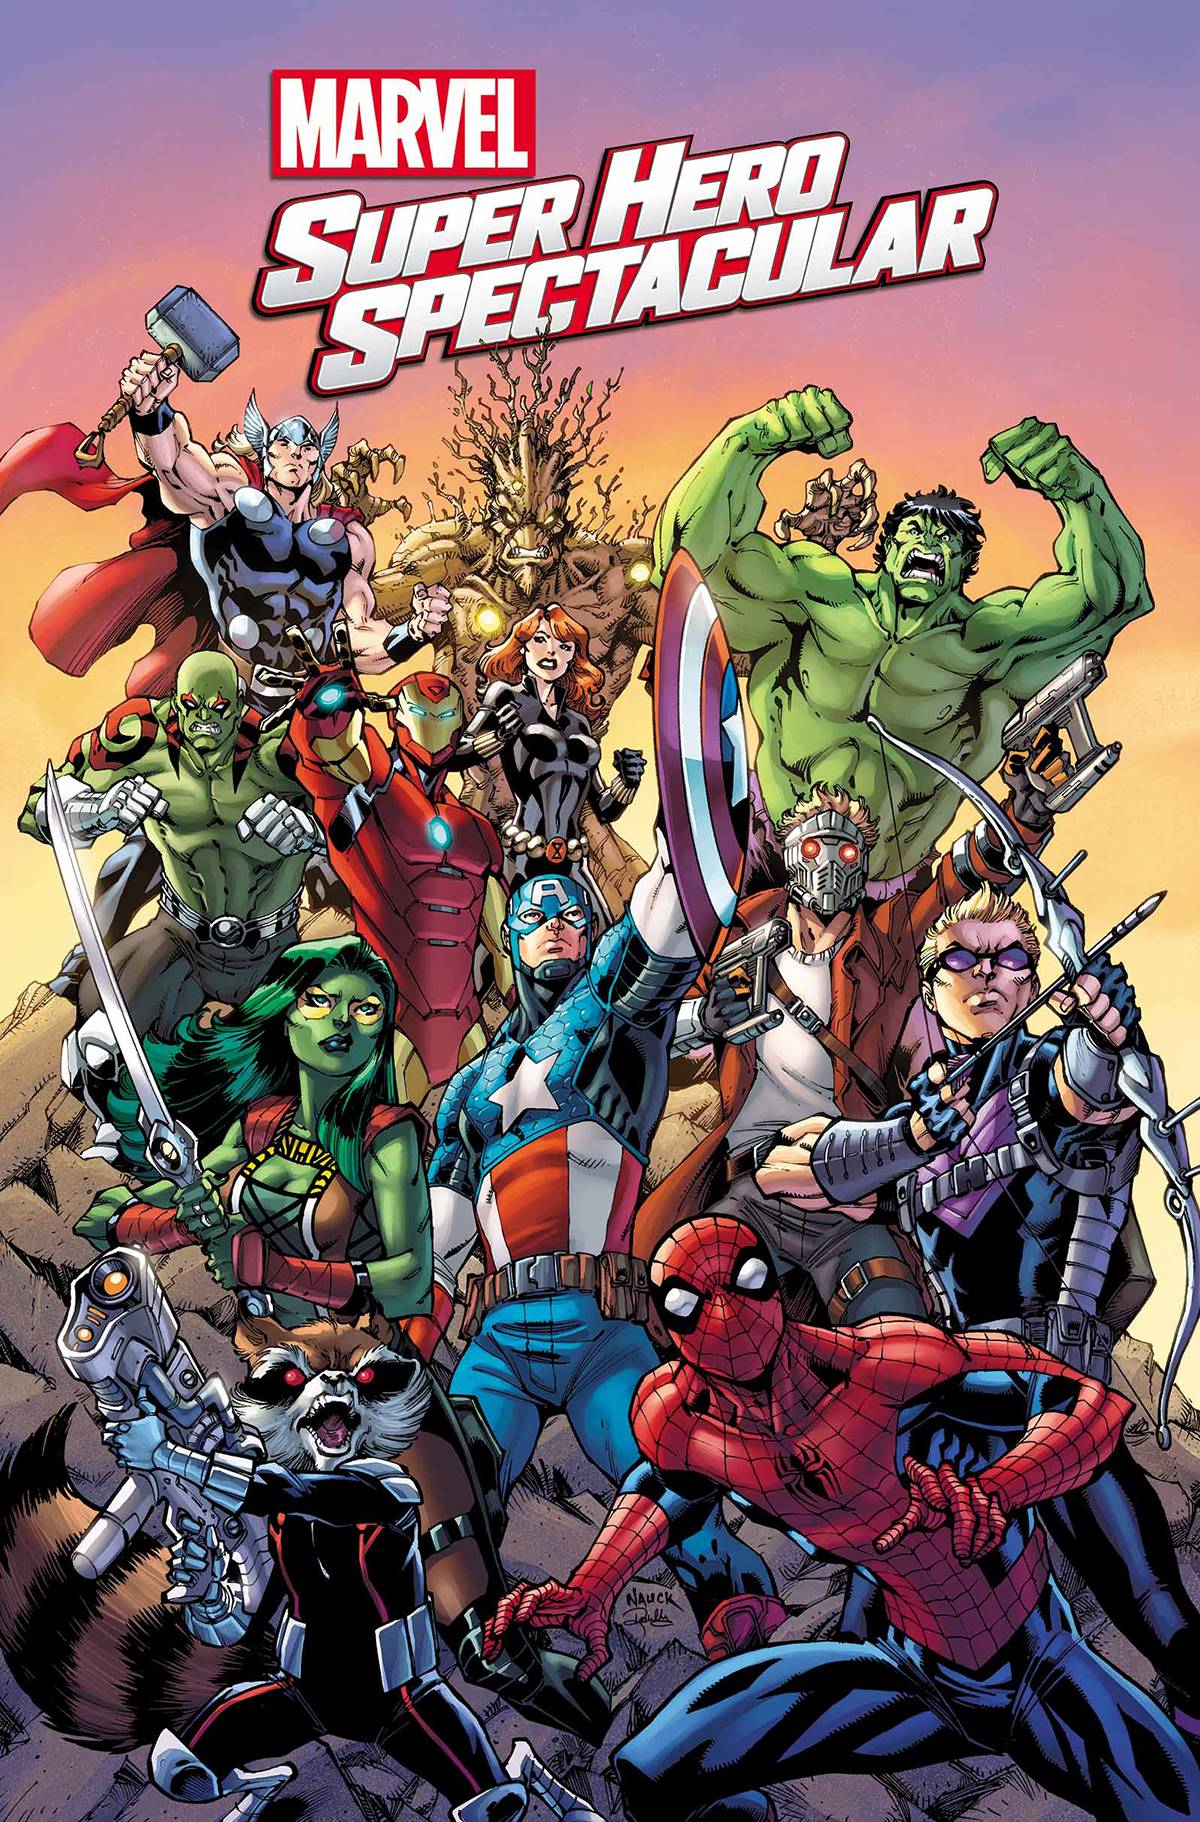 Marvel Super Hero Spectacular #1 (2015)